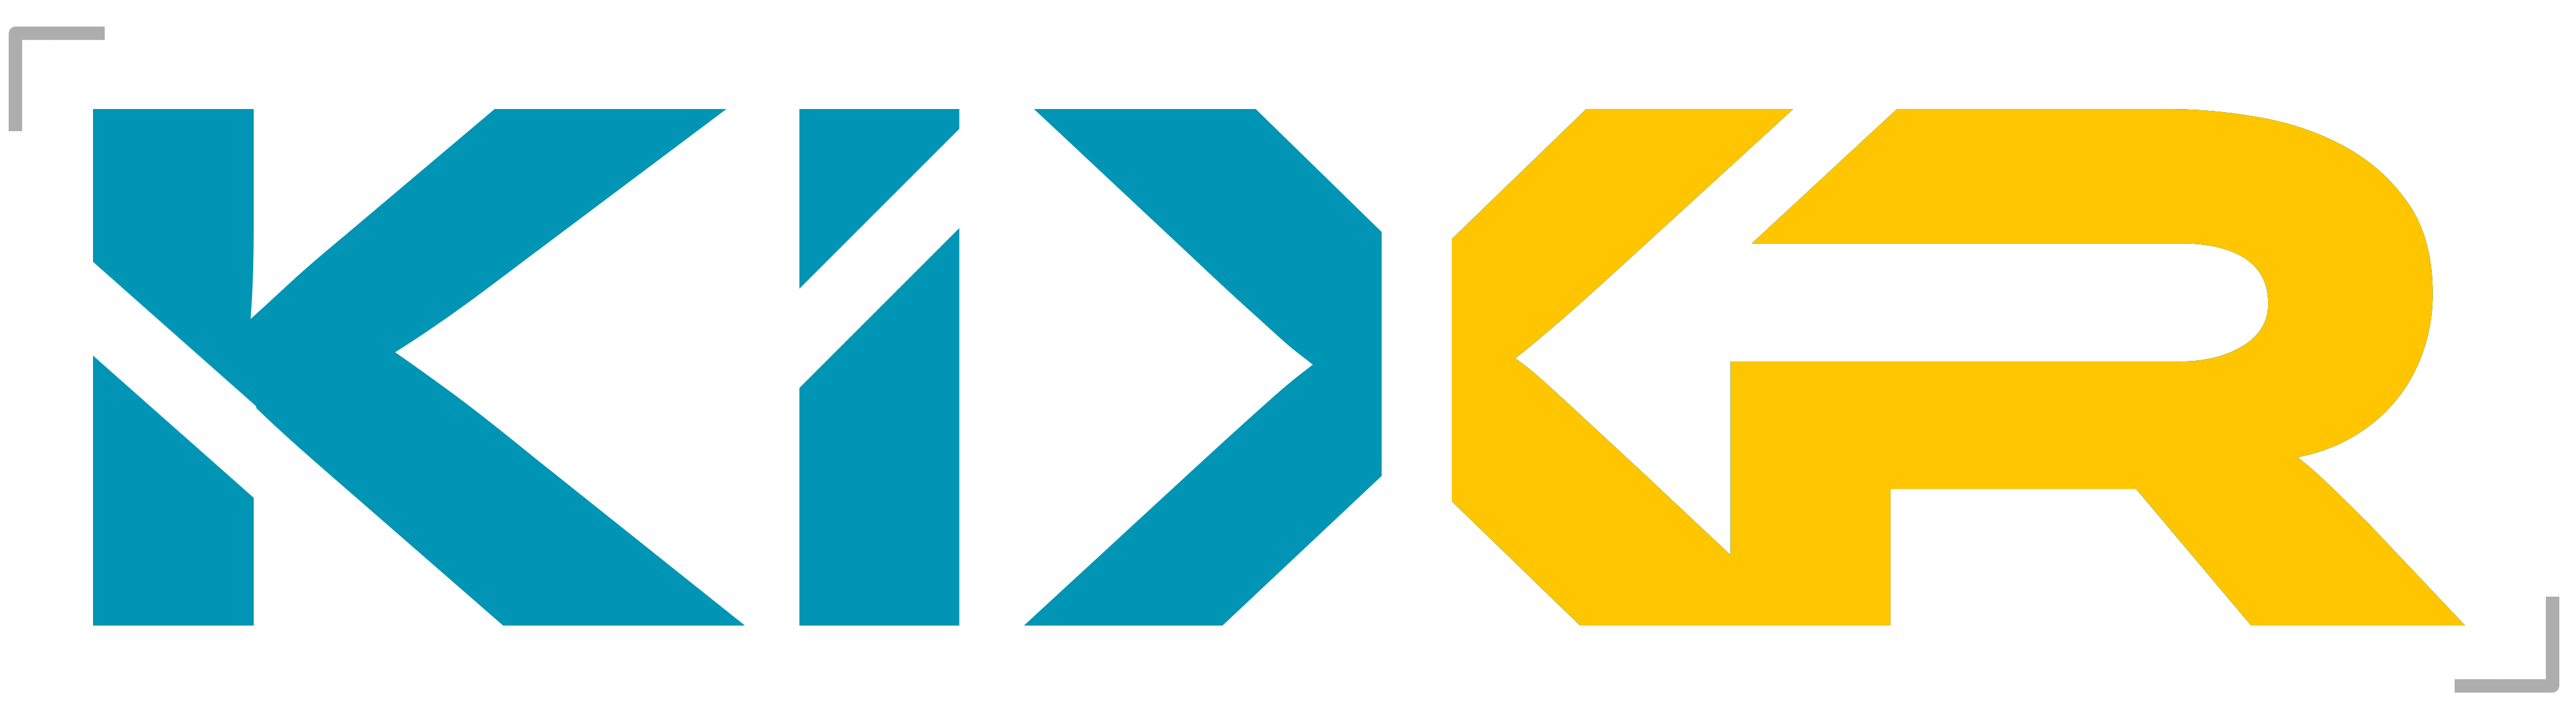 KiXR dark logo